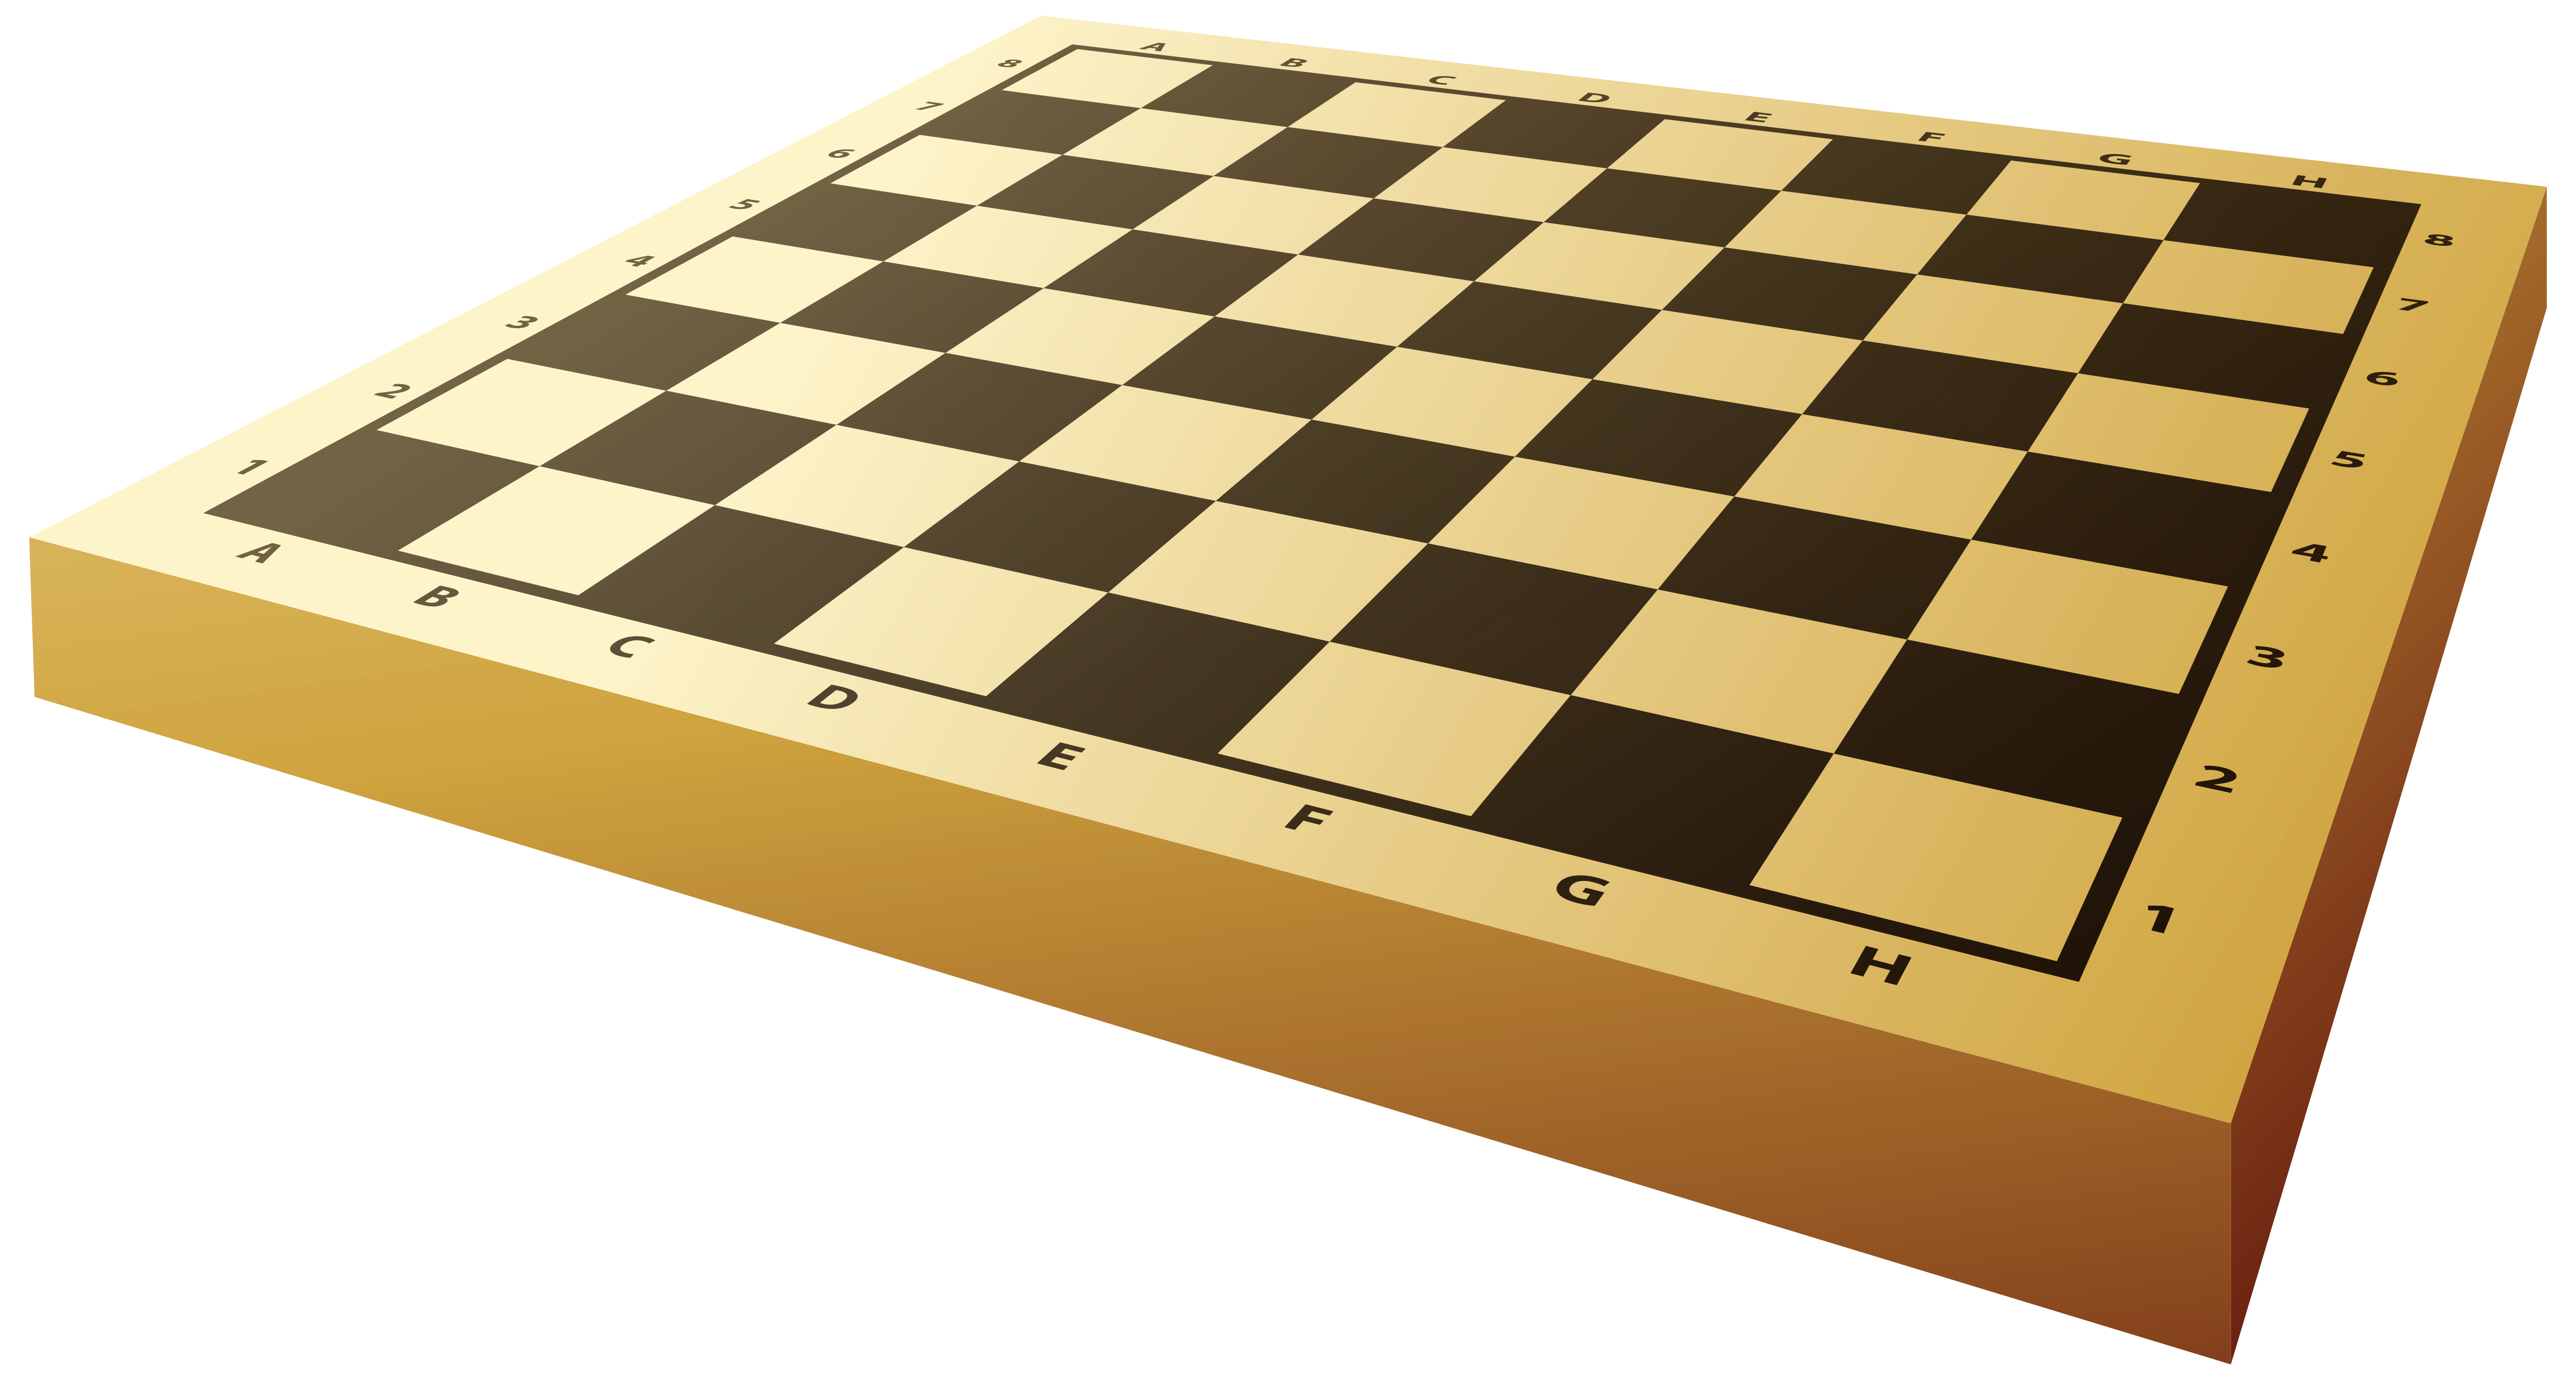 Chessboard. Шахматная доска. Шахматы доска. Шахматная доска деревянная. Шахматная доска для детей.